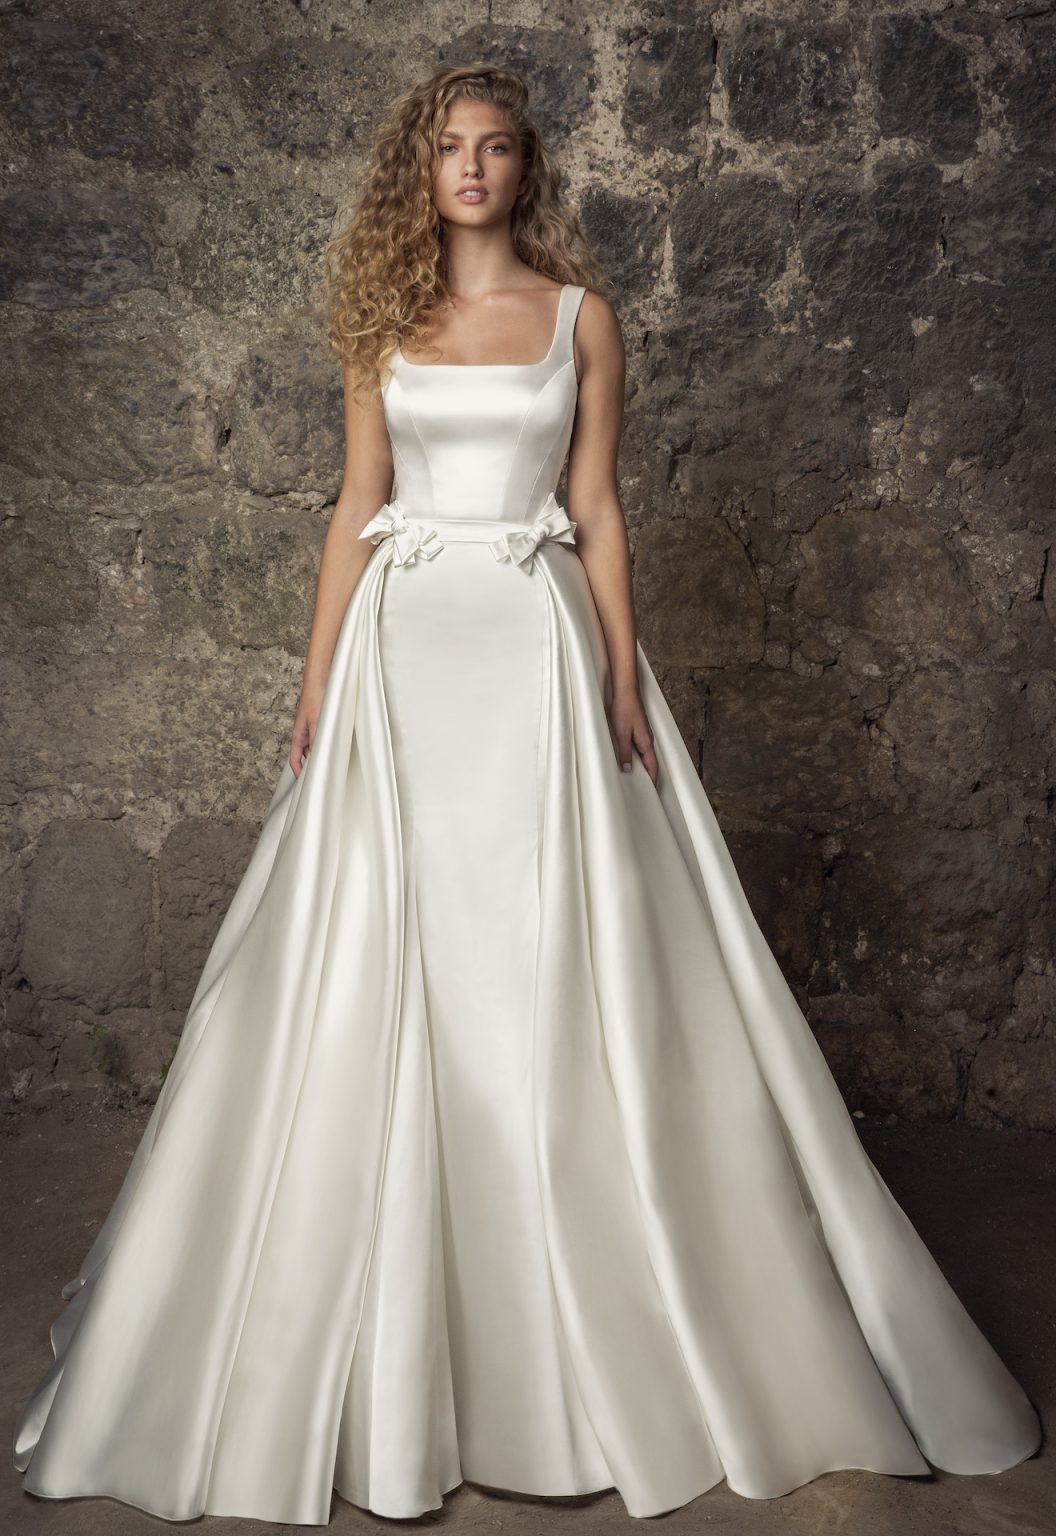 Pnina Tornai Sleeveless Satin Square Neck Mermaid Wedding Dress With Pearl Belt And Overskirt 48000009 1 1056x1536 